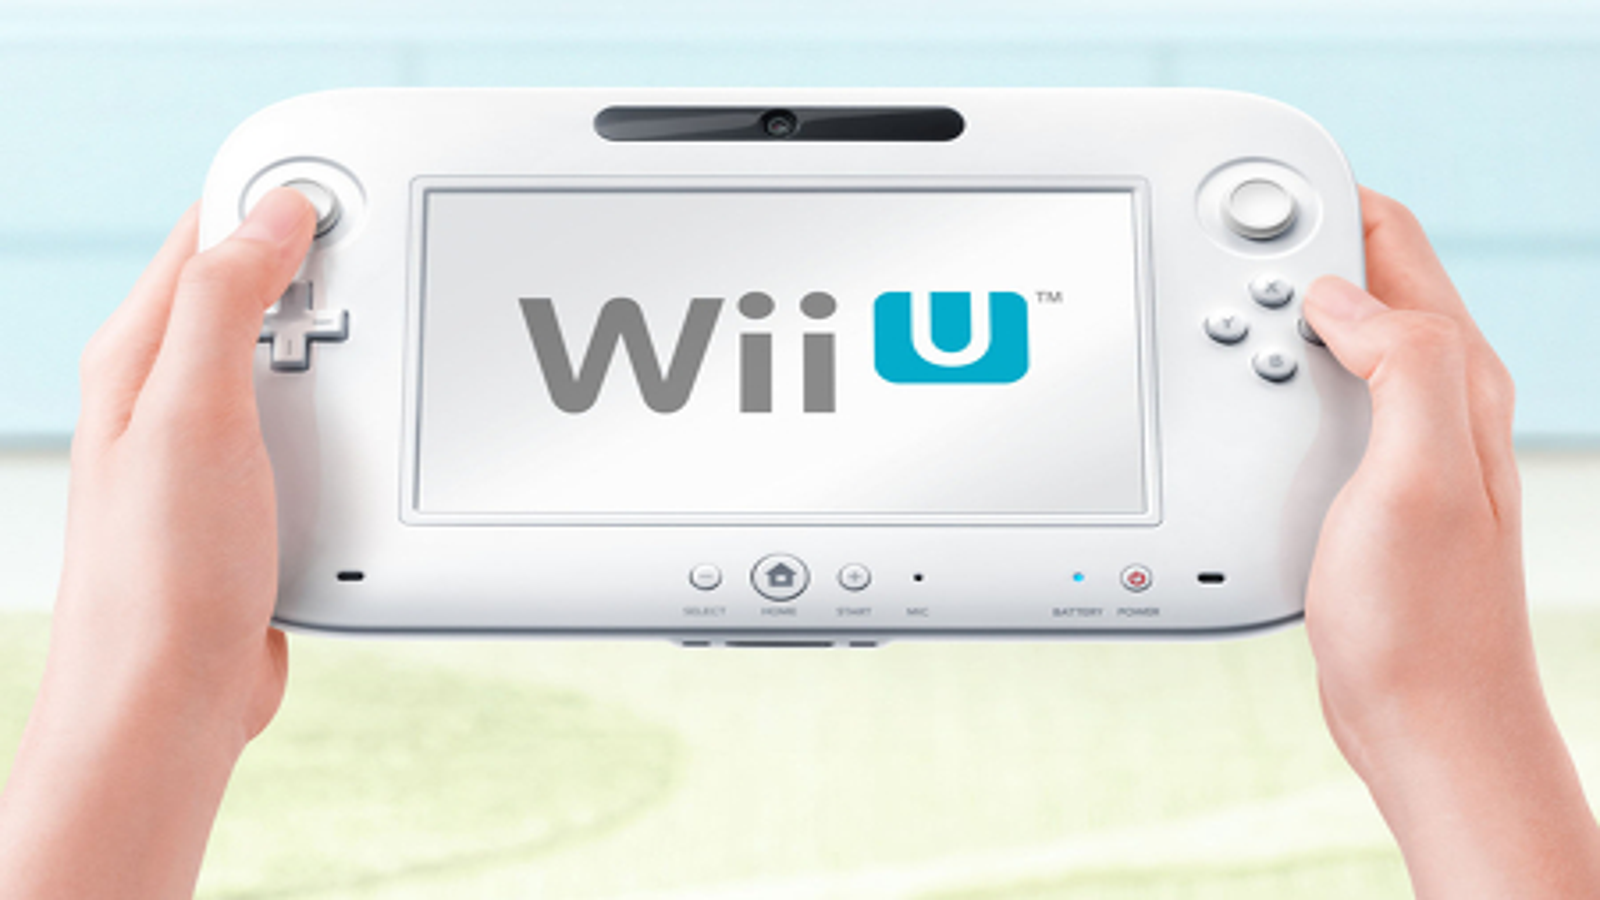 Wii U - Overview Video 